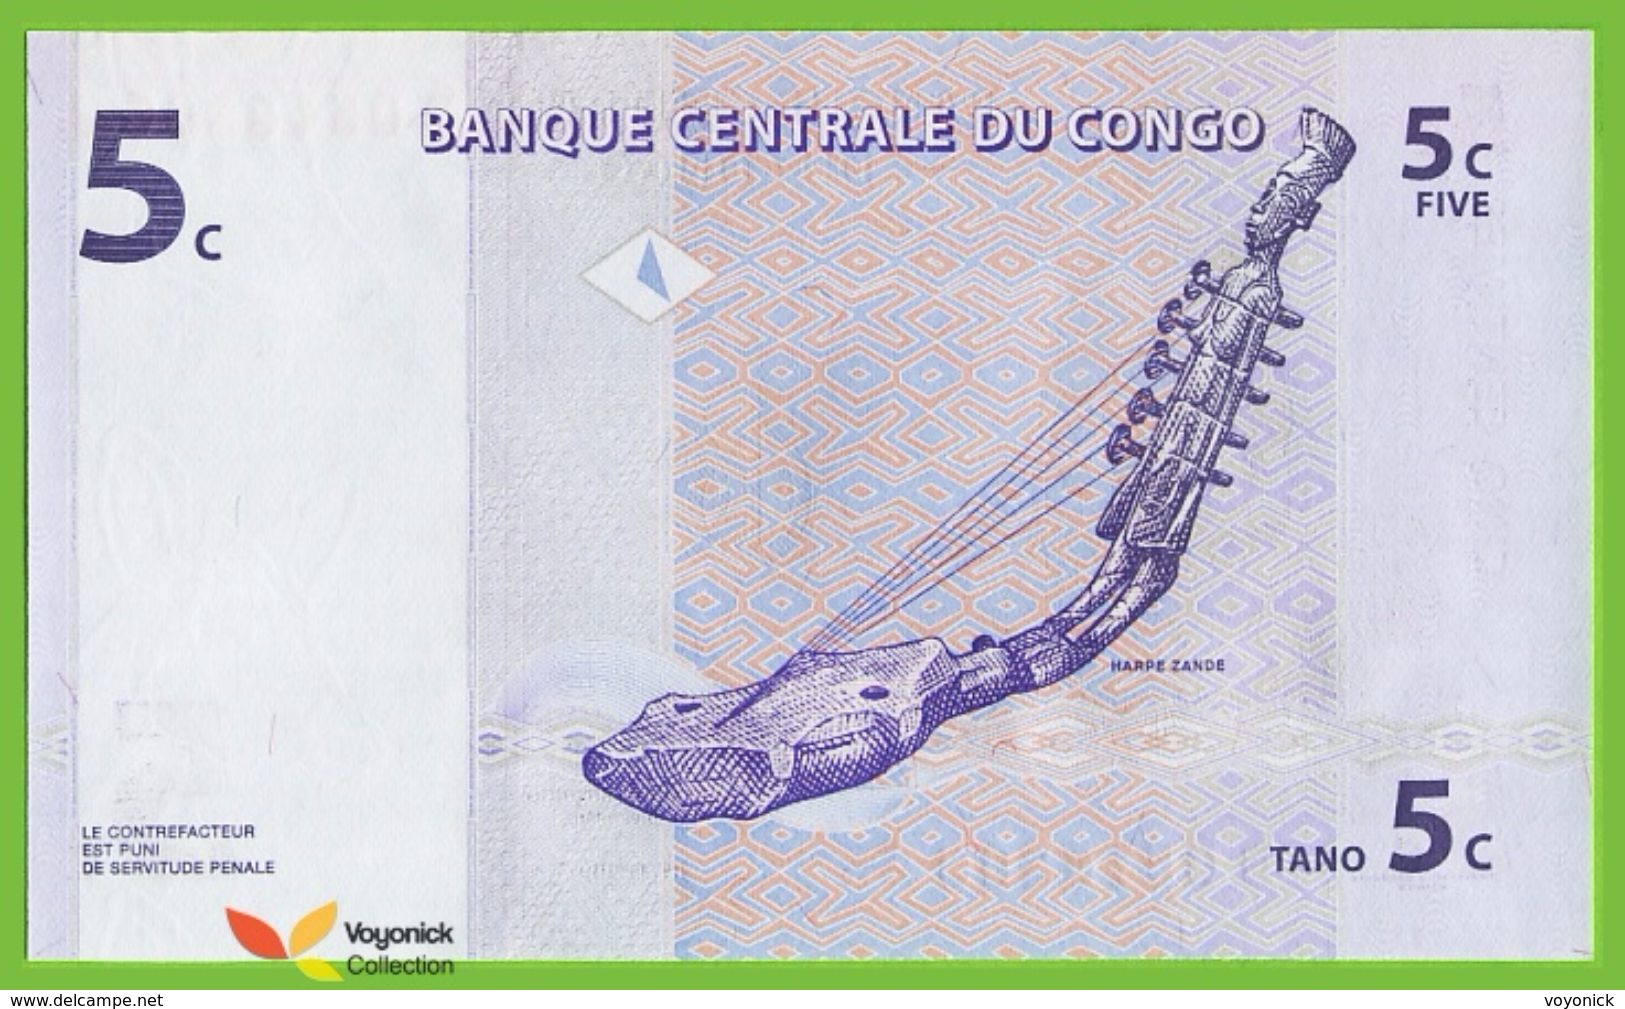 Voyo CONGO 5 Centimes 1997 P81a  B302a Prefix B Surfix J UNC Instruments - Republic Of Congo (Congo-Brazzaville)